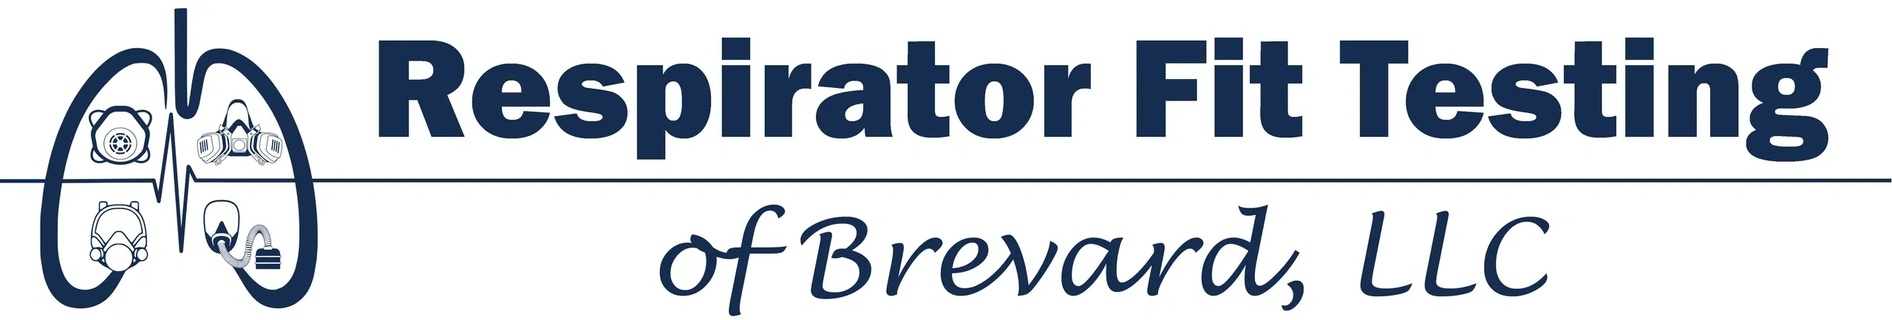 Respirator Fit Testing of Brevard, LLC